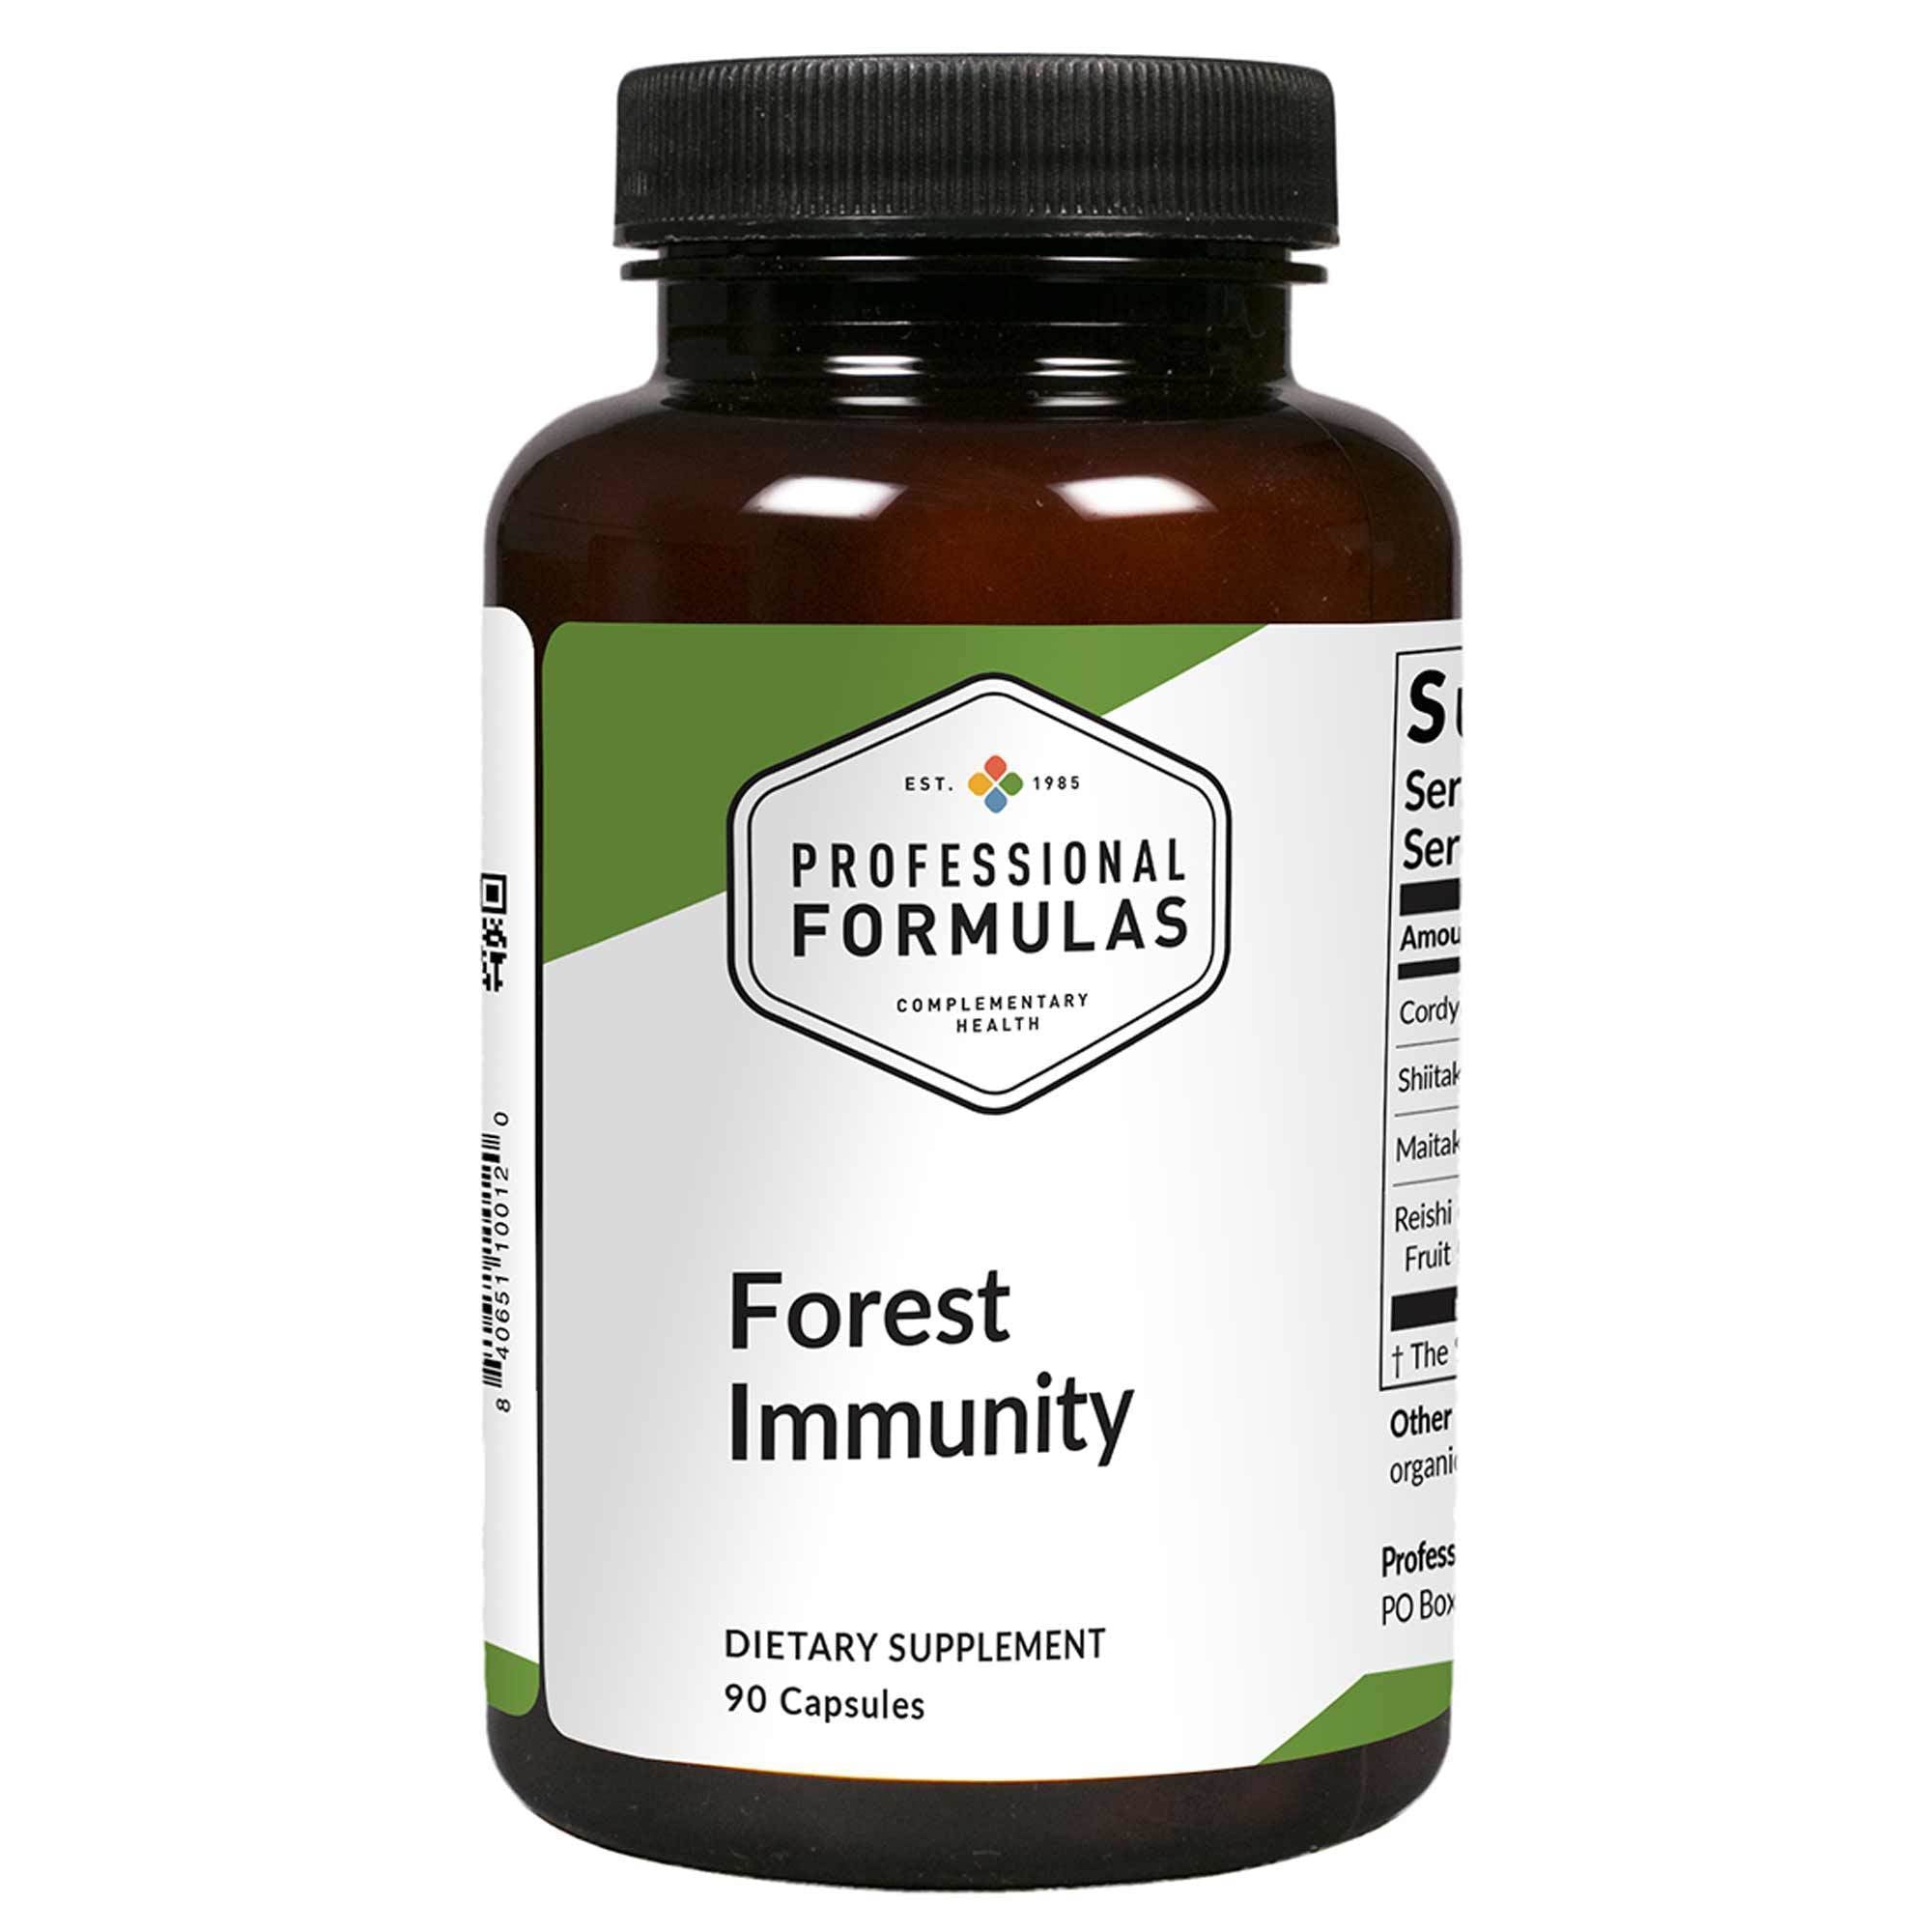 Professional Formulas Forest Immunity 90 Capsules - 2 Pack